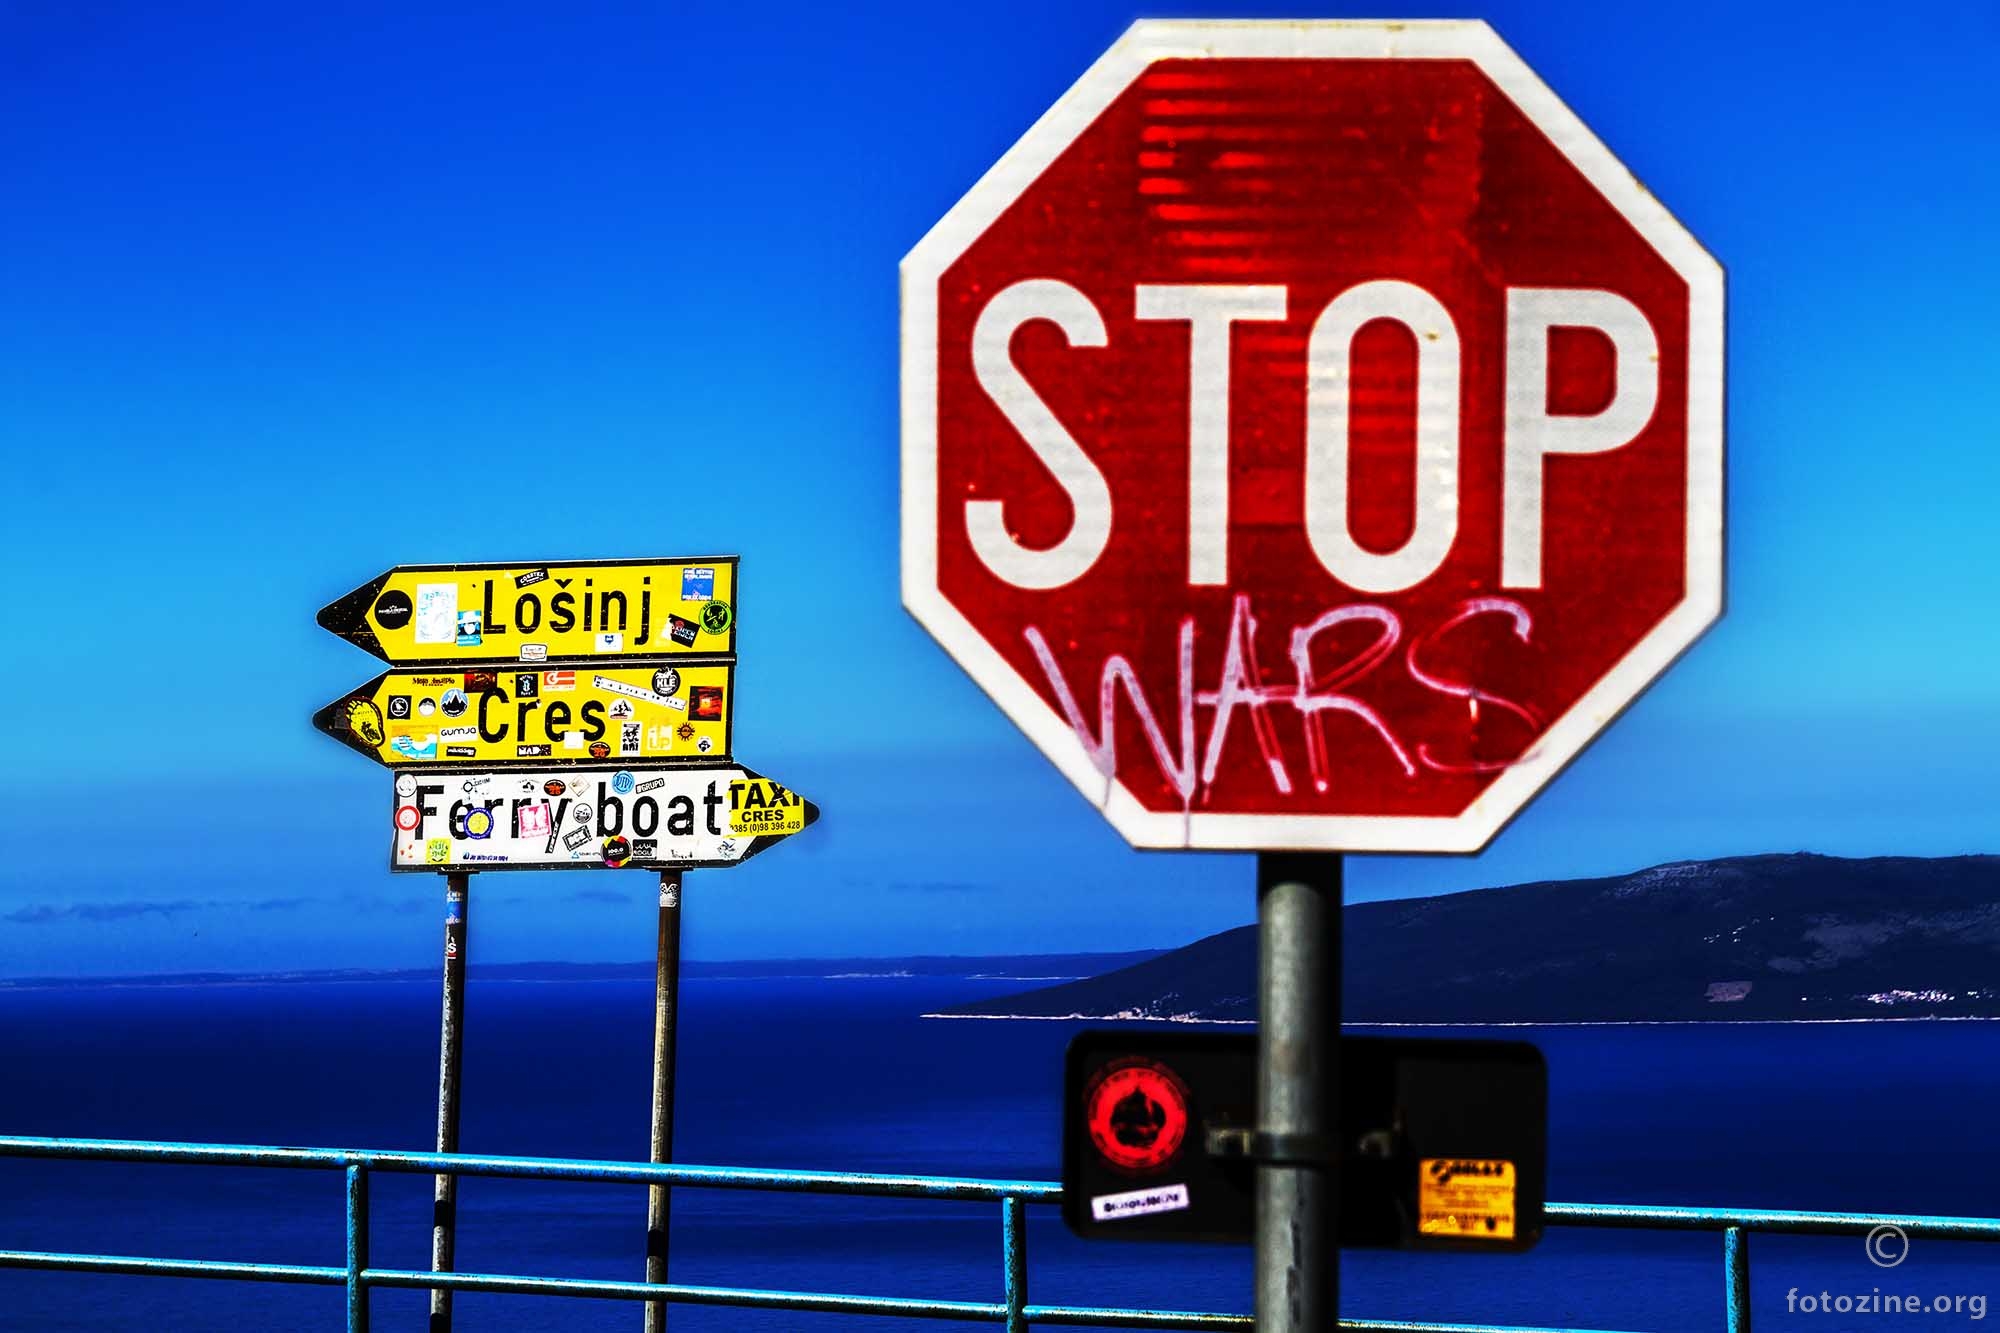 Stop wars